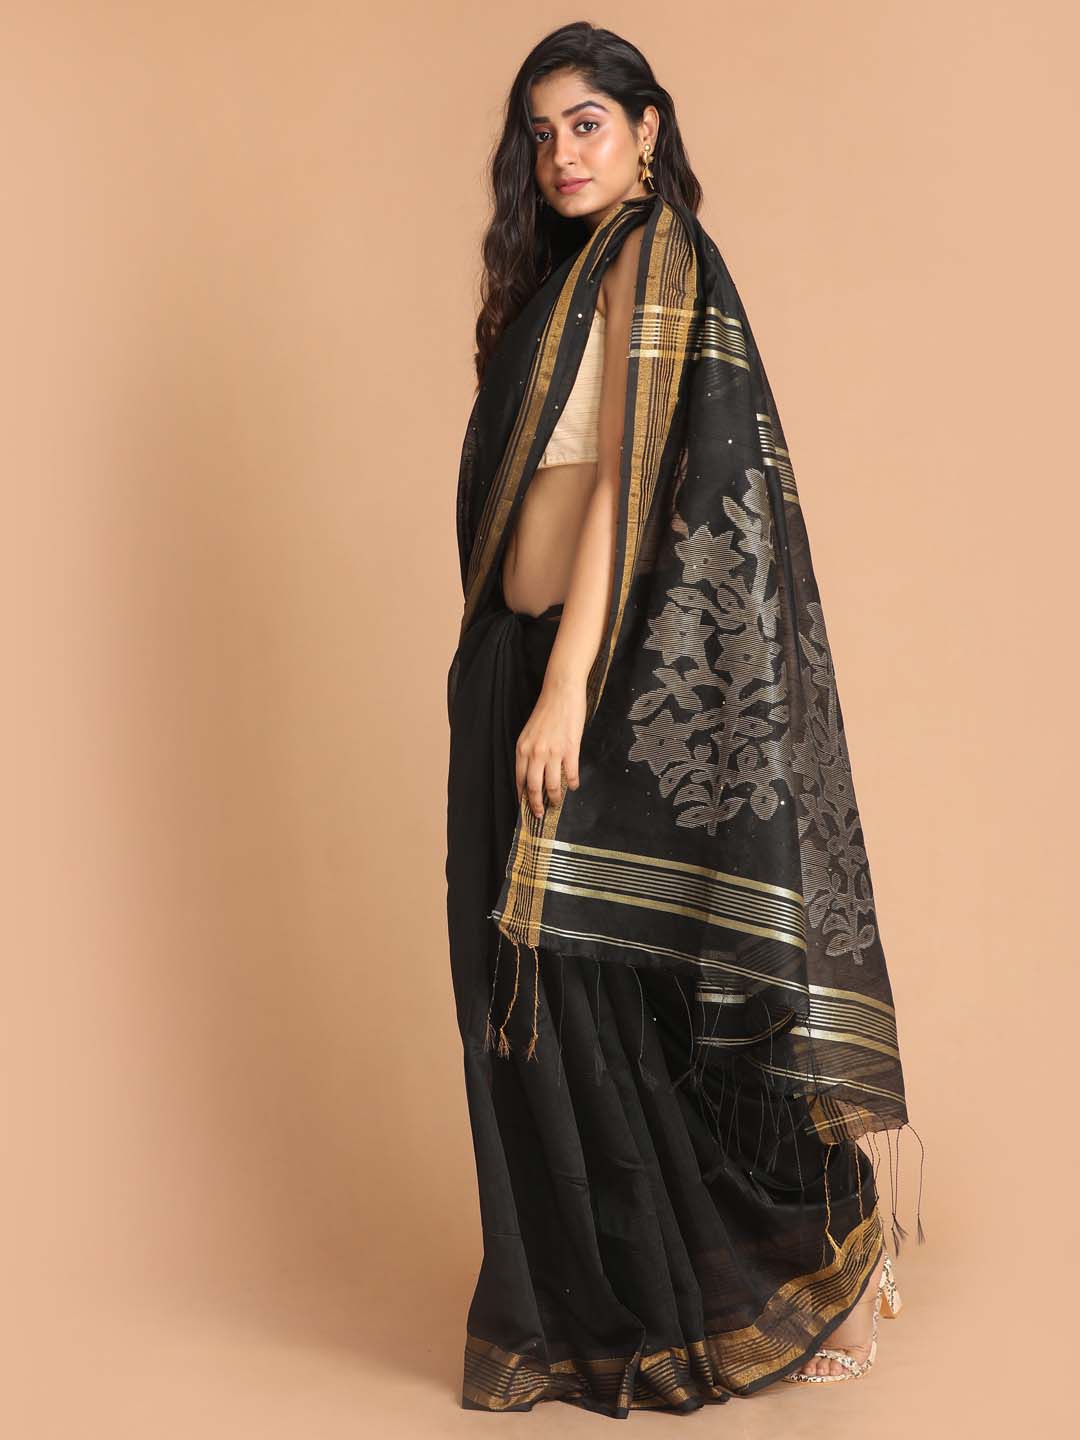 Indethnic Black Bengal Handloom Cotton Blend Party Saree - View 1